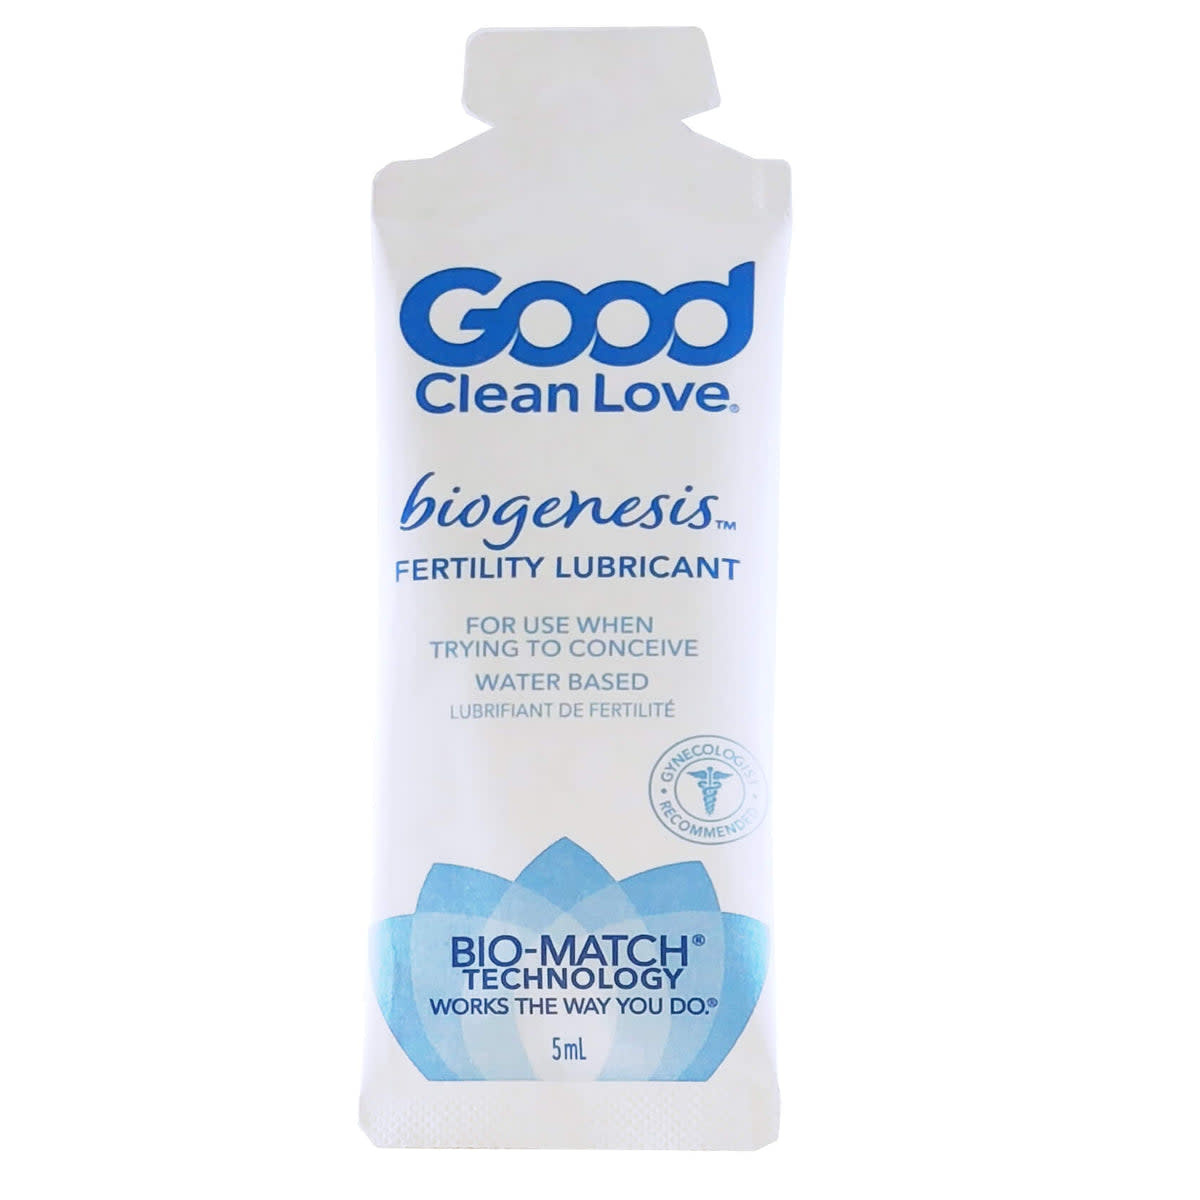 Good Clean Love BioGenesis™ Fertility Lubricant Sample - She Bop